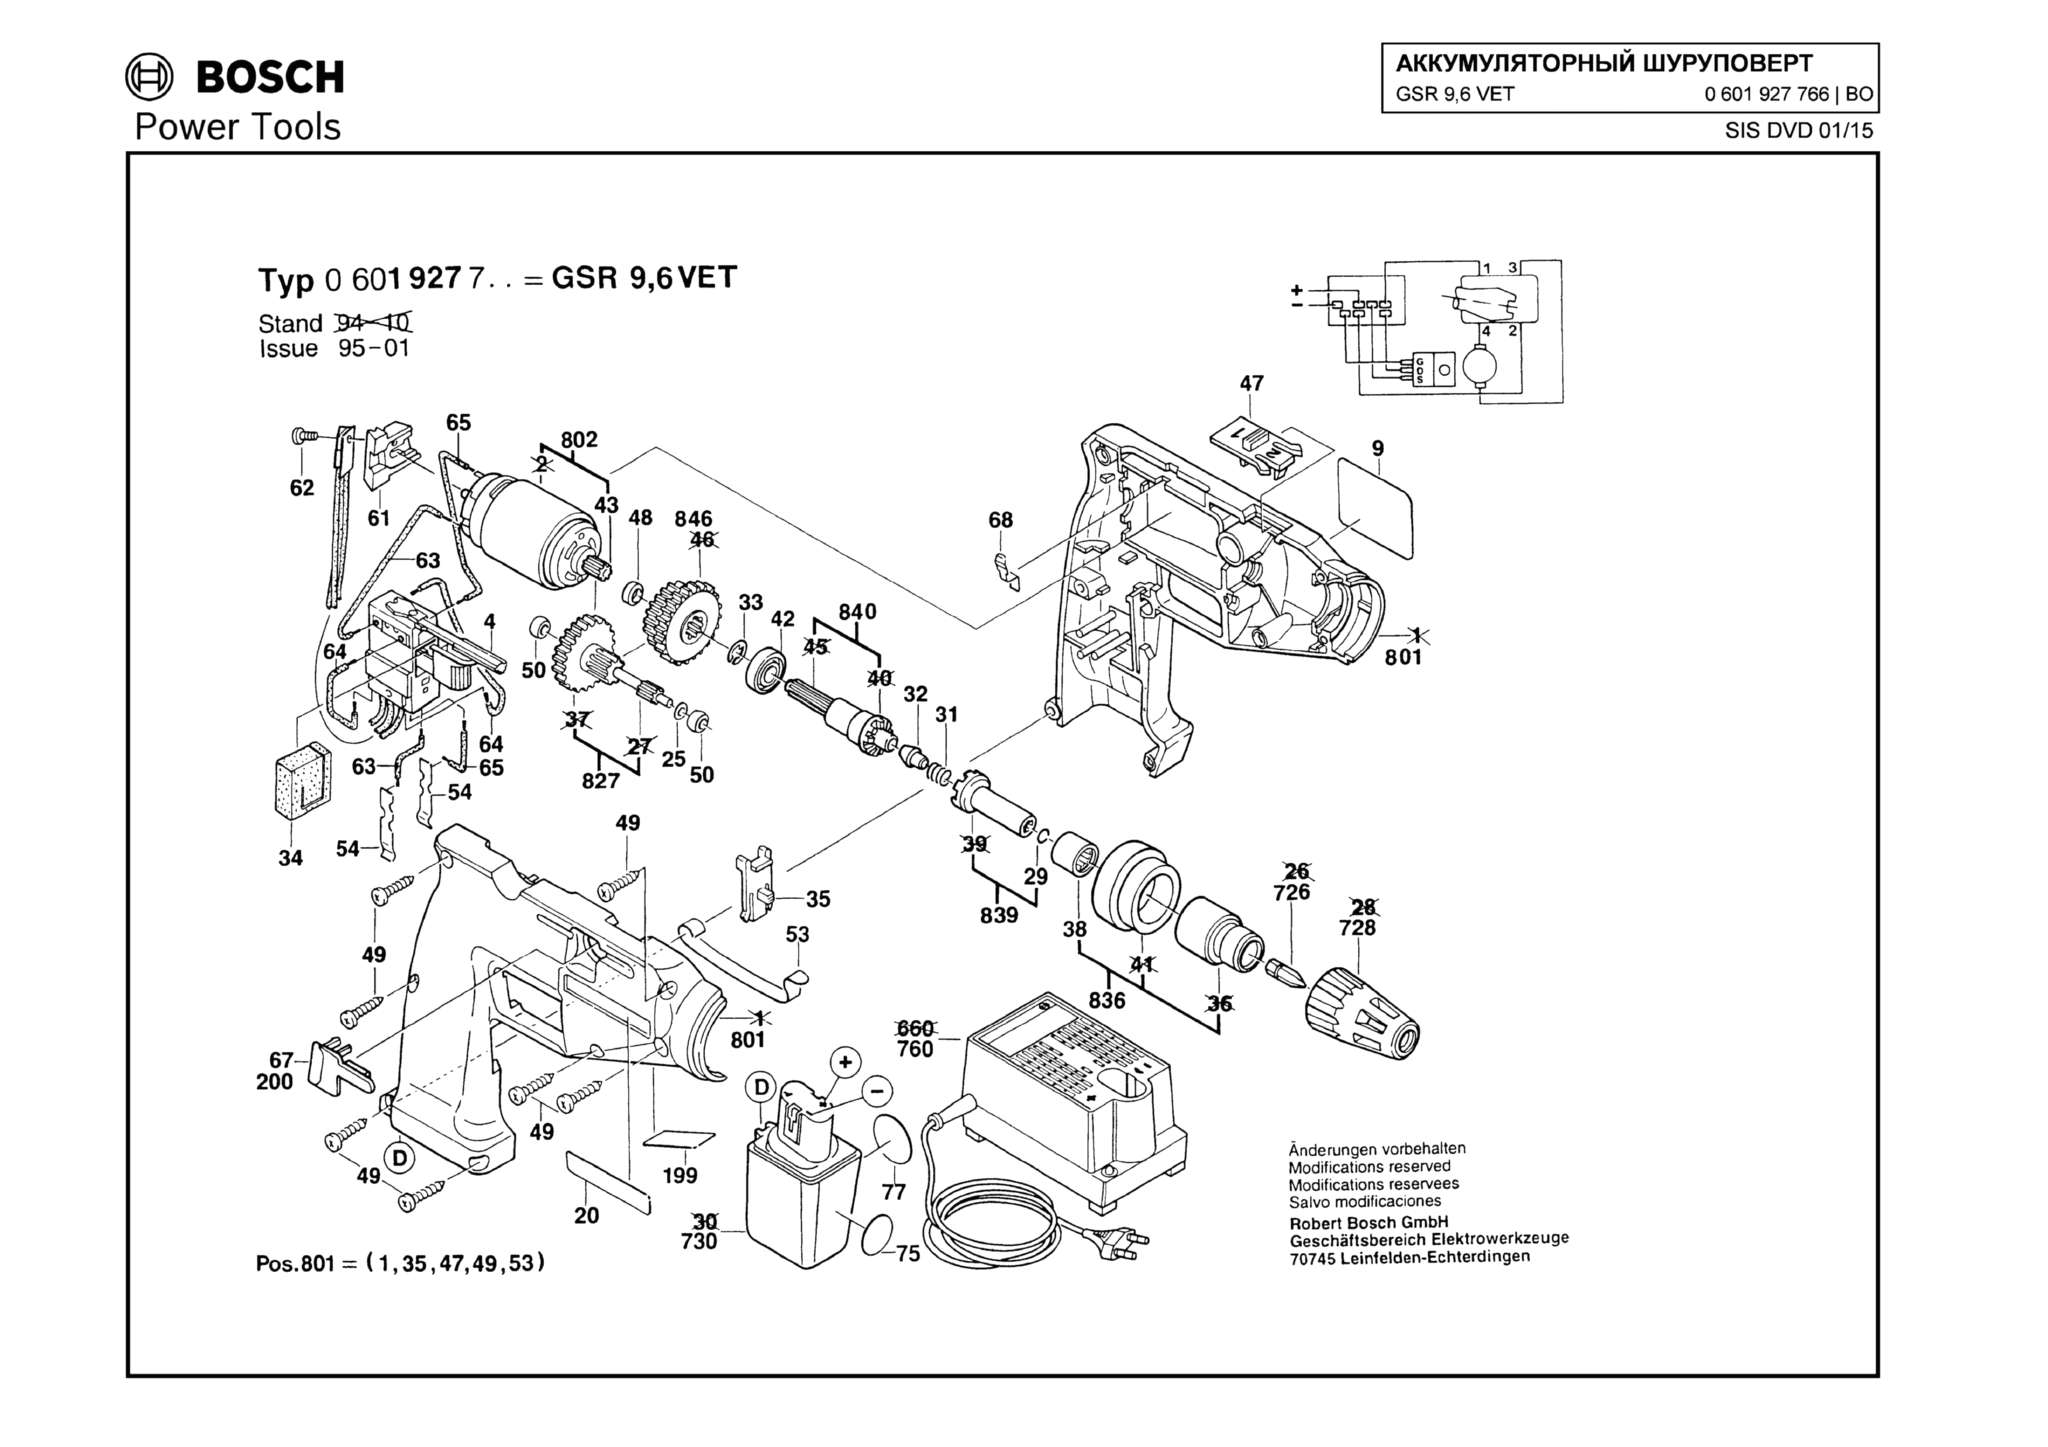 Запчасти, схема и деталировка Bosch GSR 9,6 VET (ТИП 0601927766)